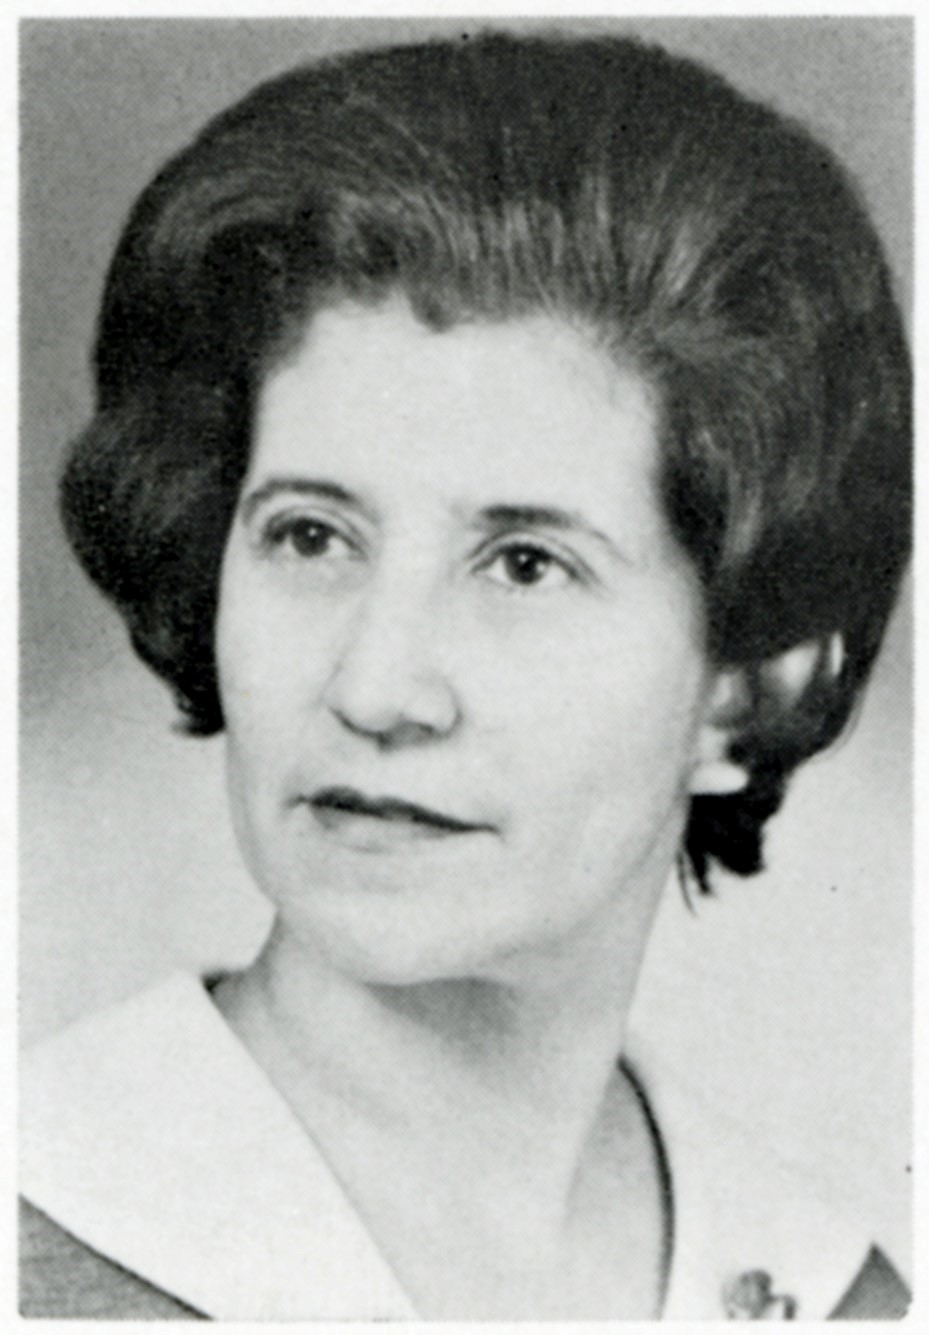 Irene Ruiz while working as a teacher at Southwest High School, 1965